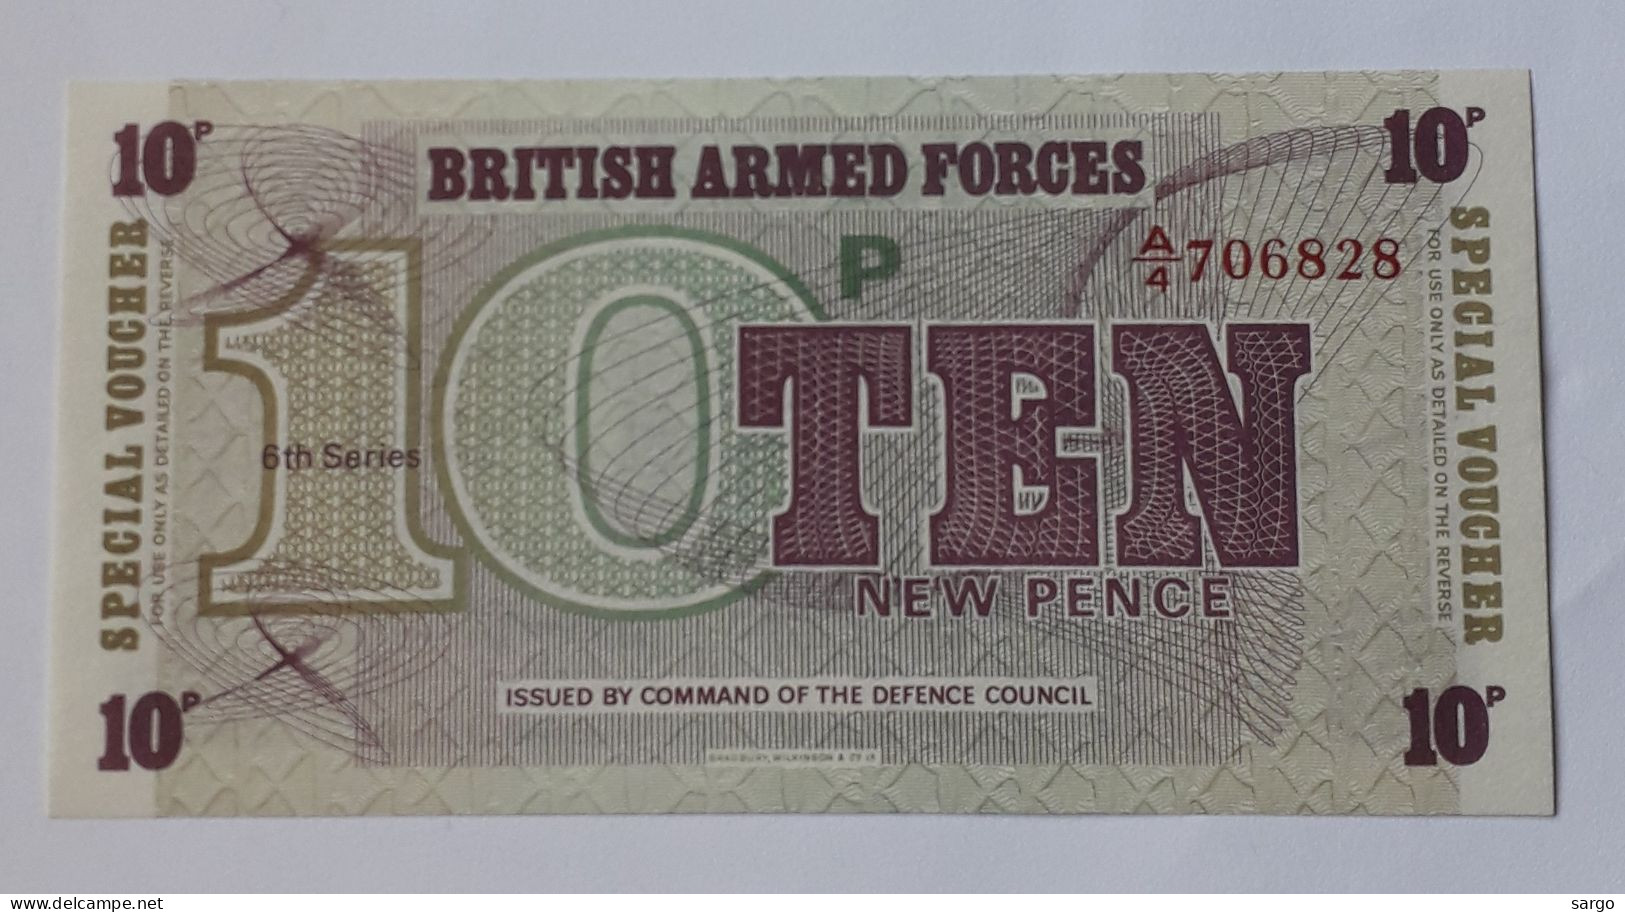 GREAT BRITAIN - BRITISH ARMED FORCES - 10 NEW PENCE - 1972 - PM 48 - BANKNOTES - PAPER MONEY - CARTAMONETA - - Forze Armate Britanniche & Docuementi Speciali